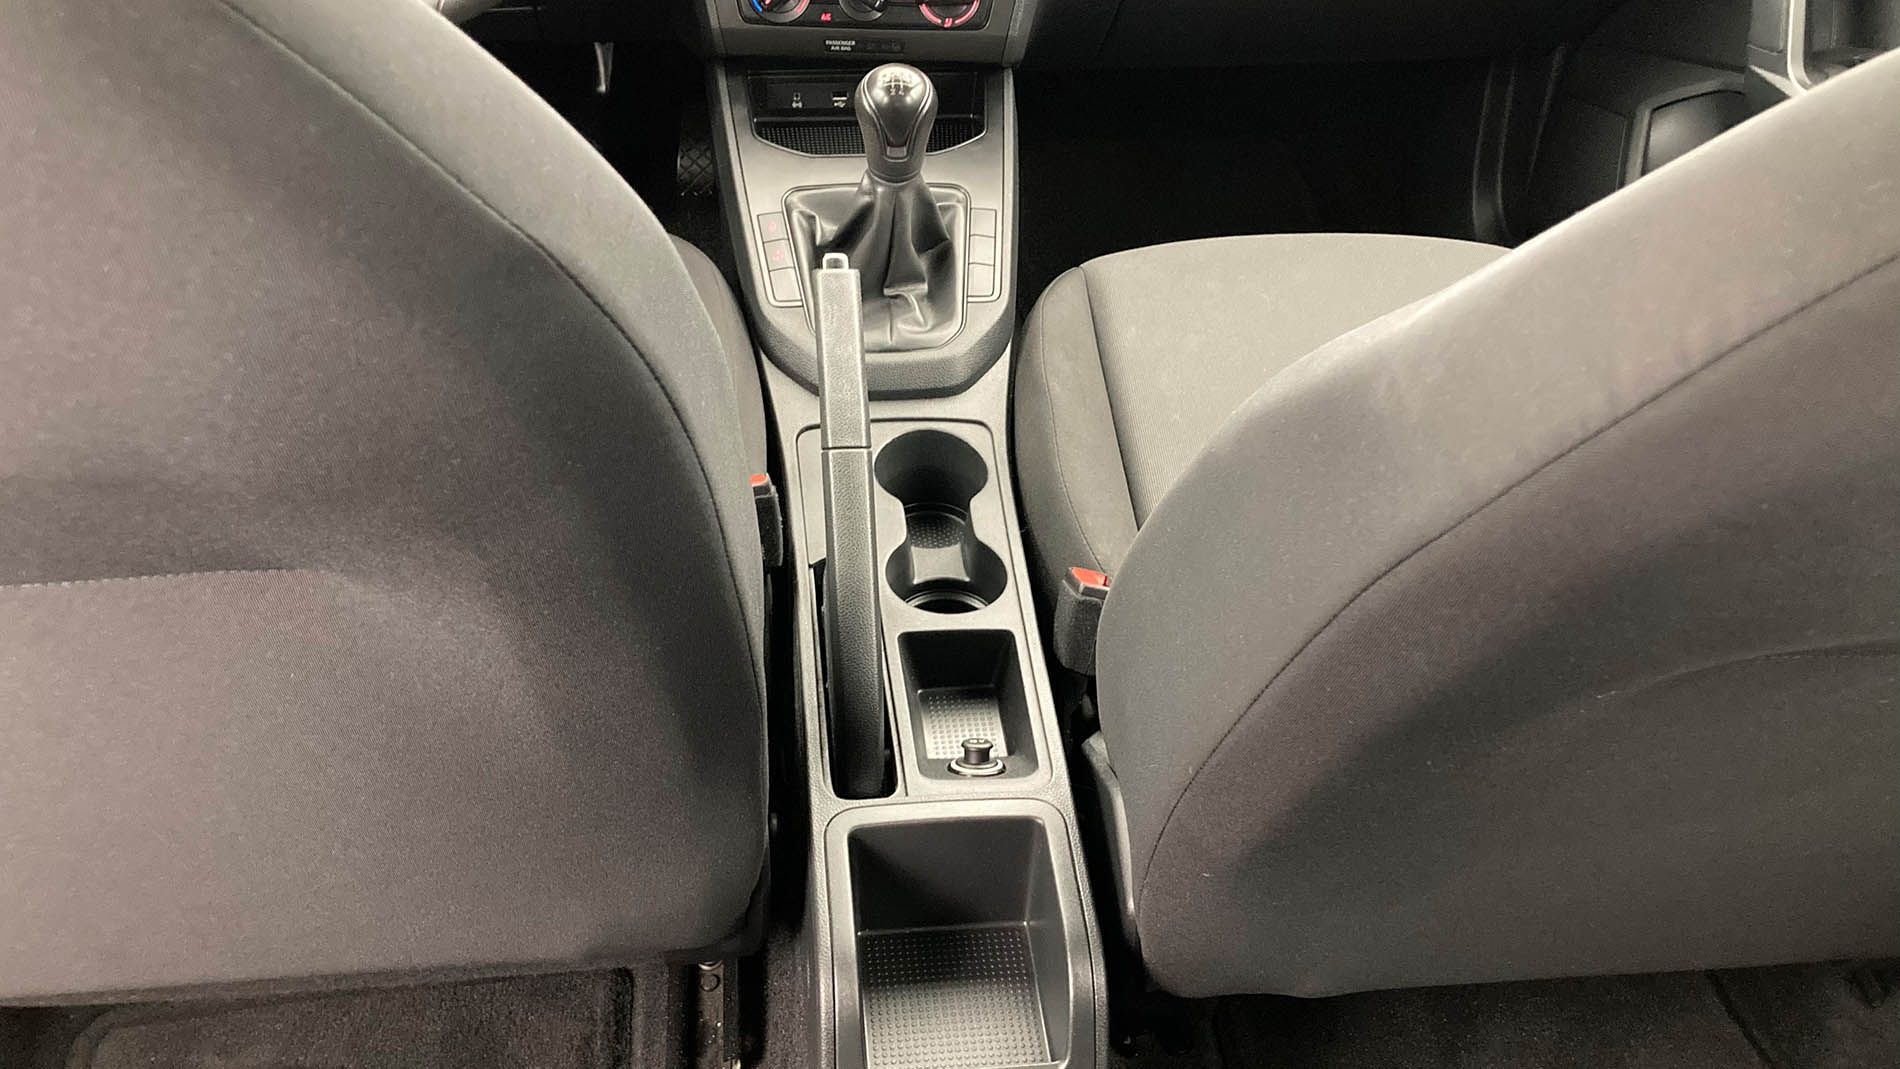 seat ibiza reference 1.0 MPI 80 2019 metallic white 20